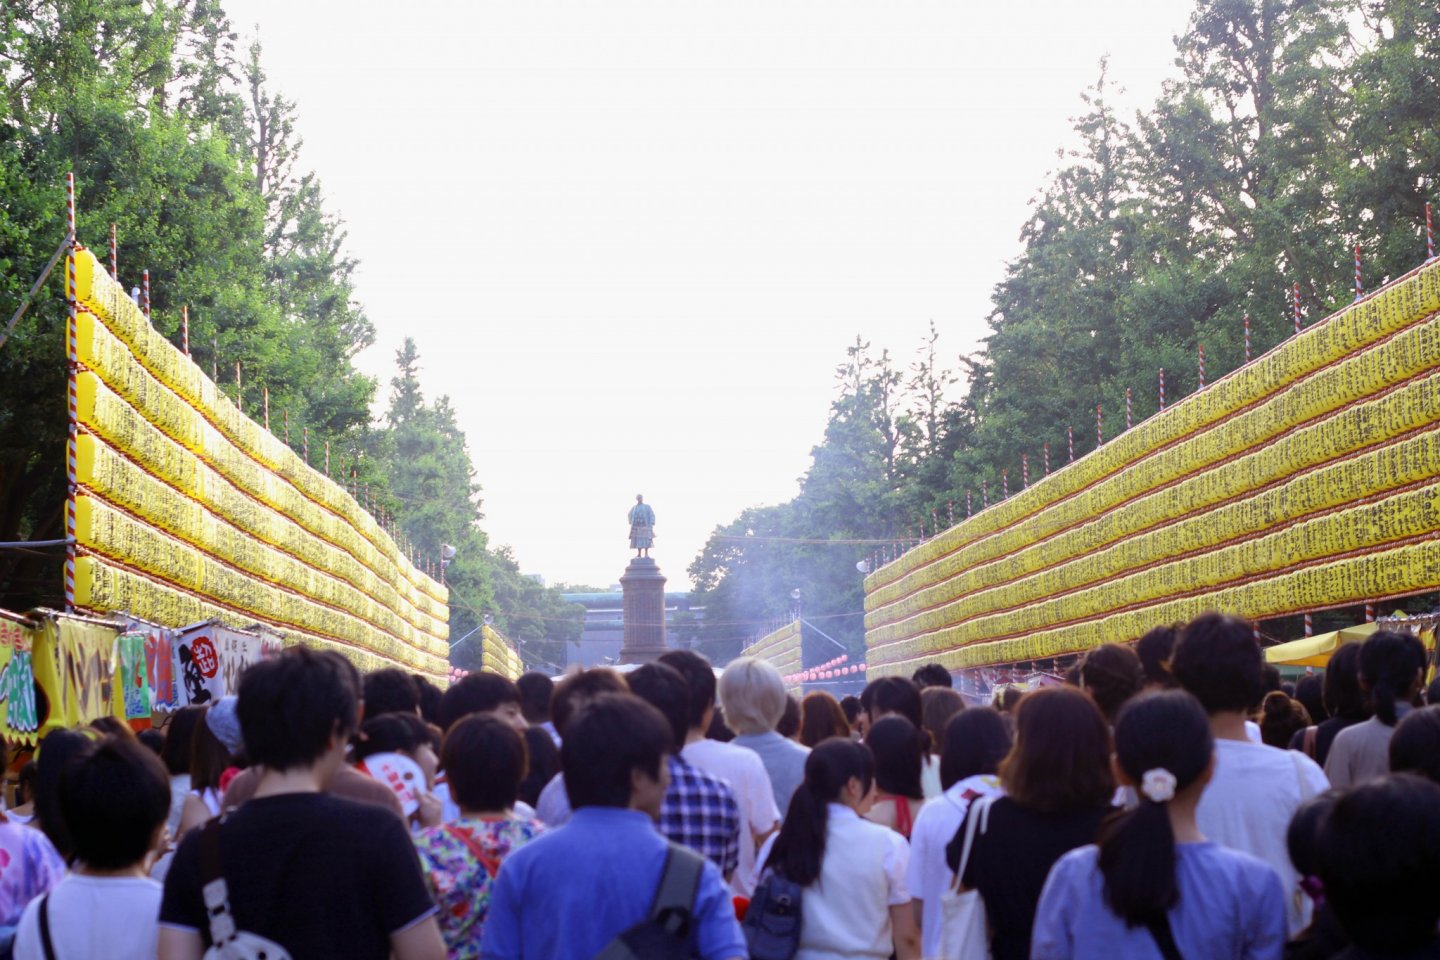 Join the hoard of festival goers at Mitama Matsuri.